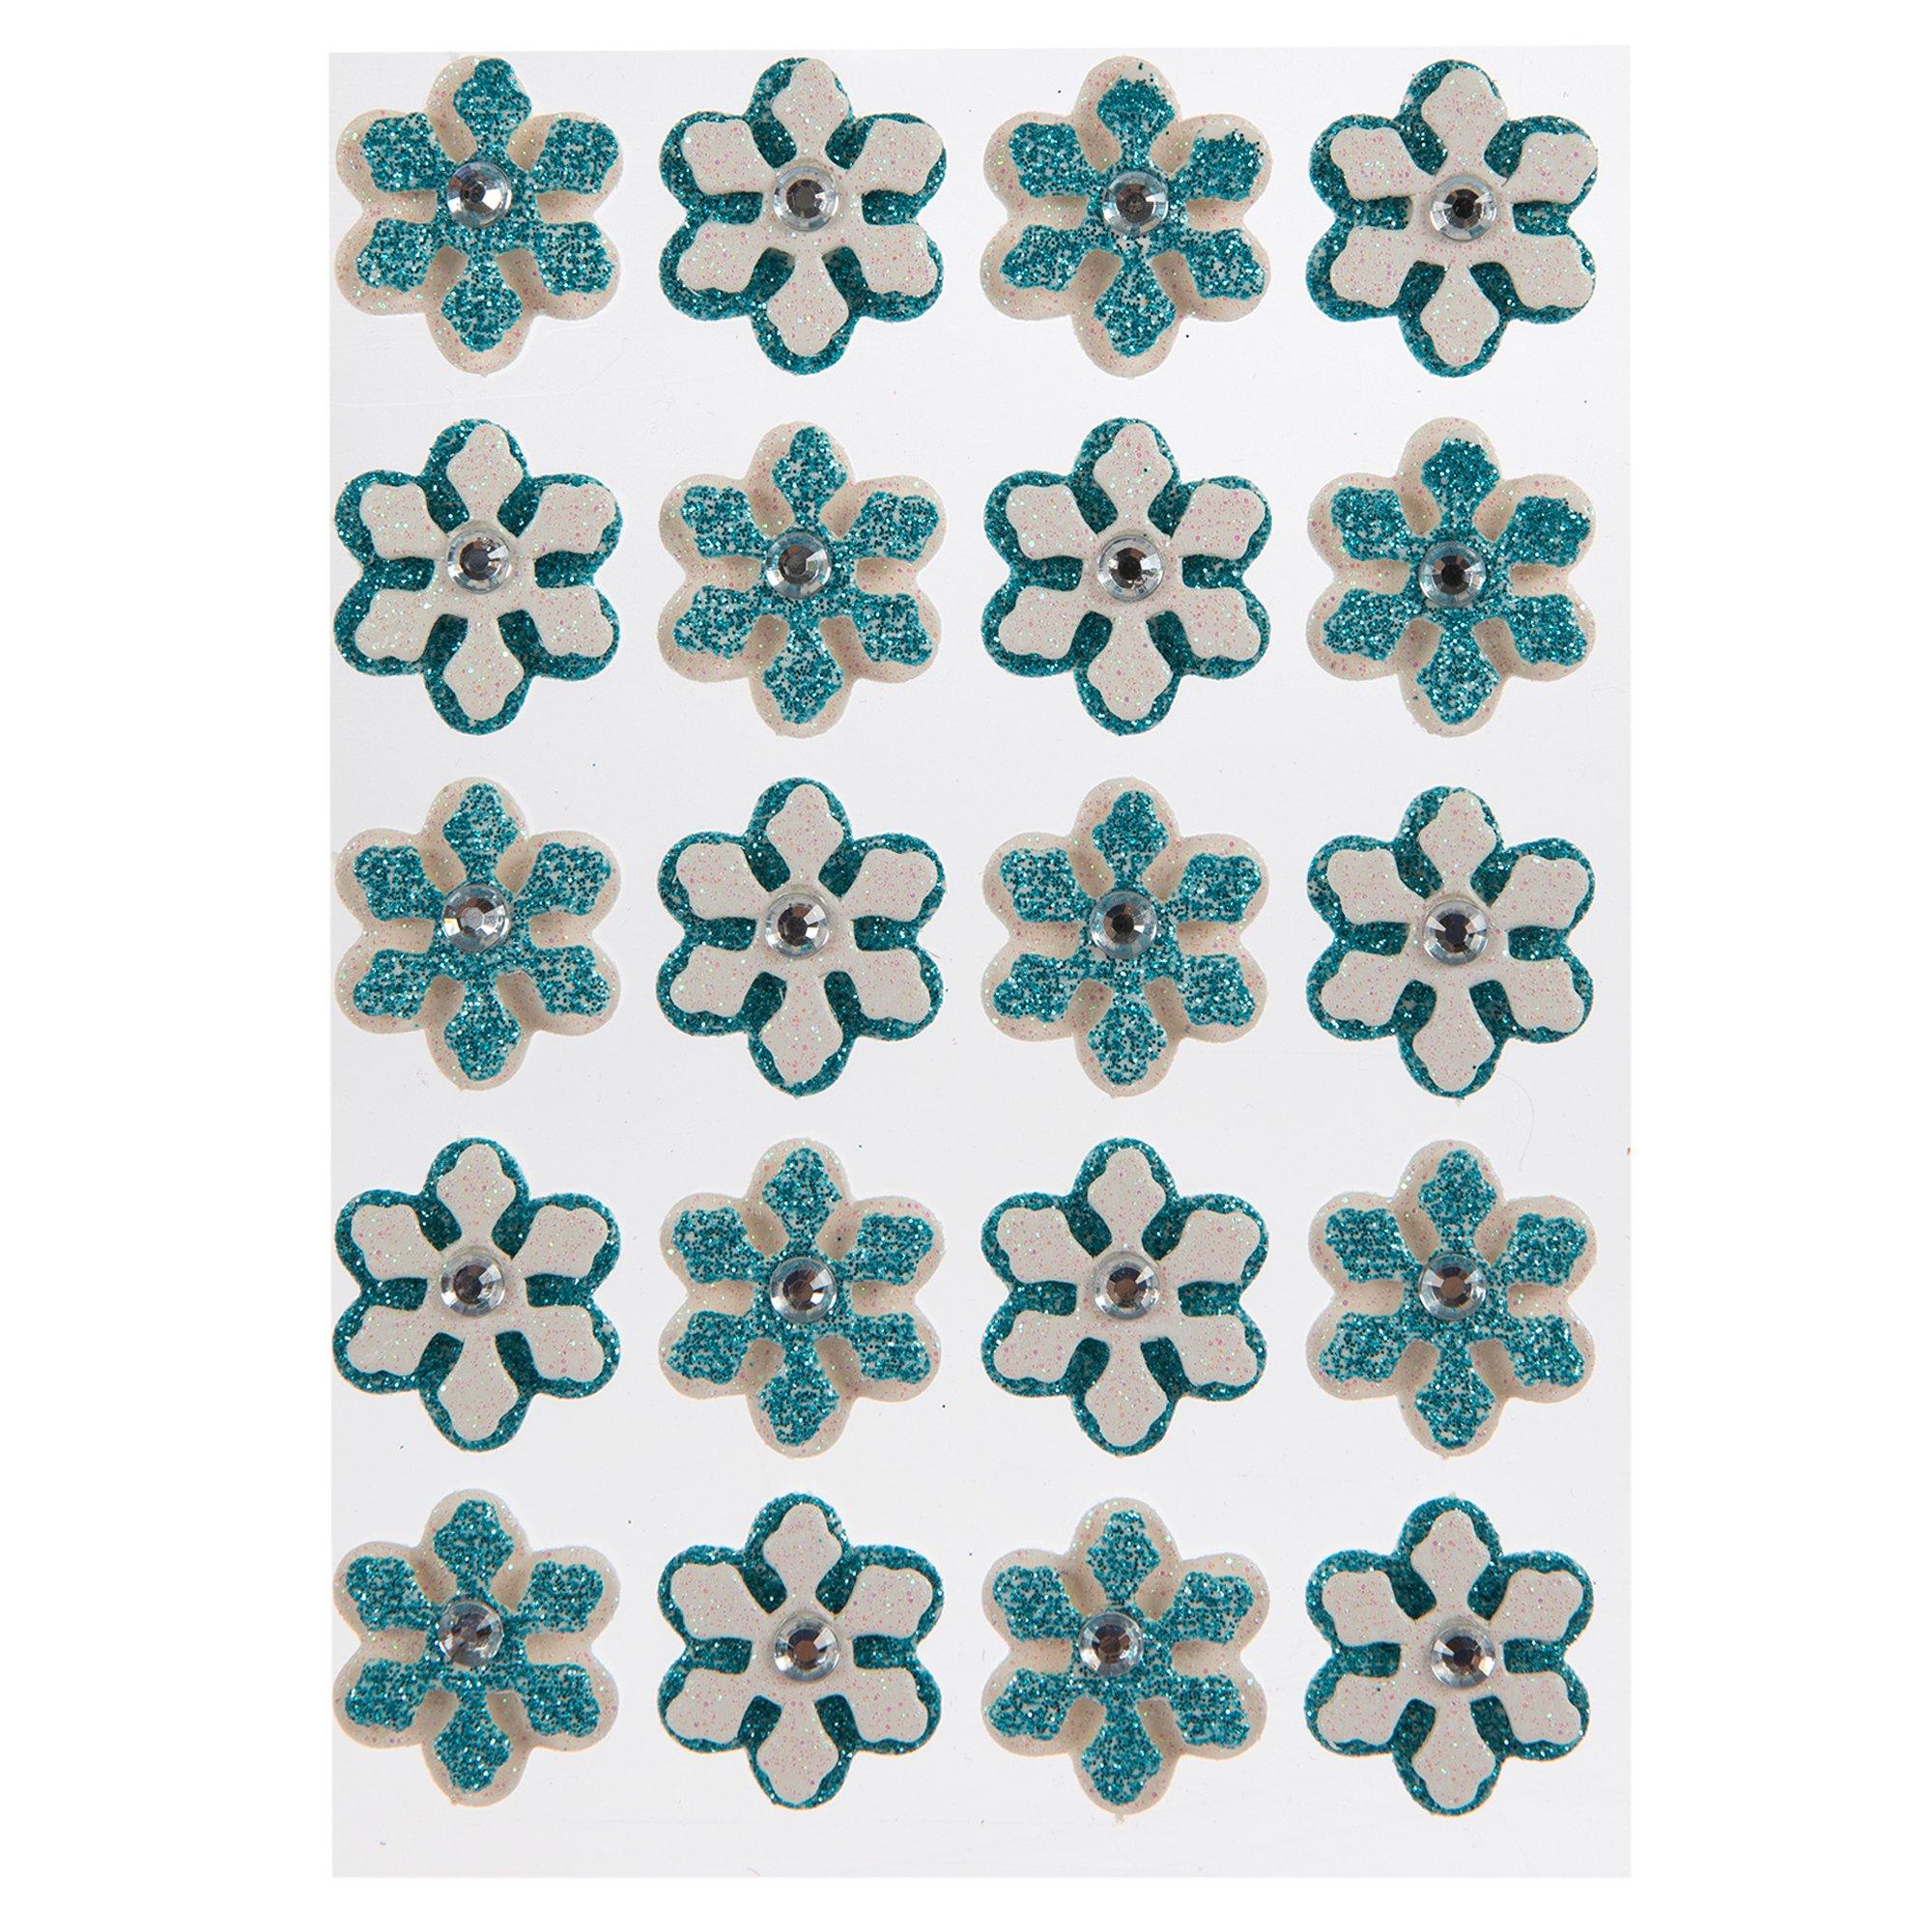 3-D White Glitter Snowflake Stickers